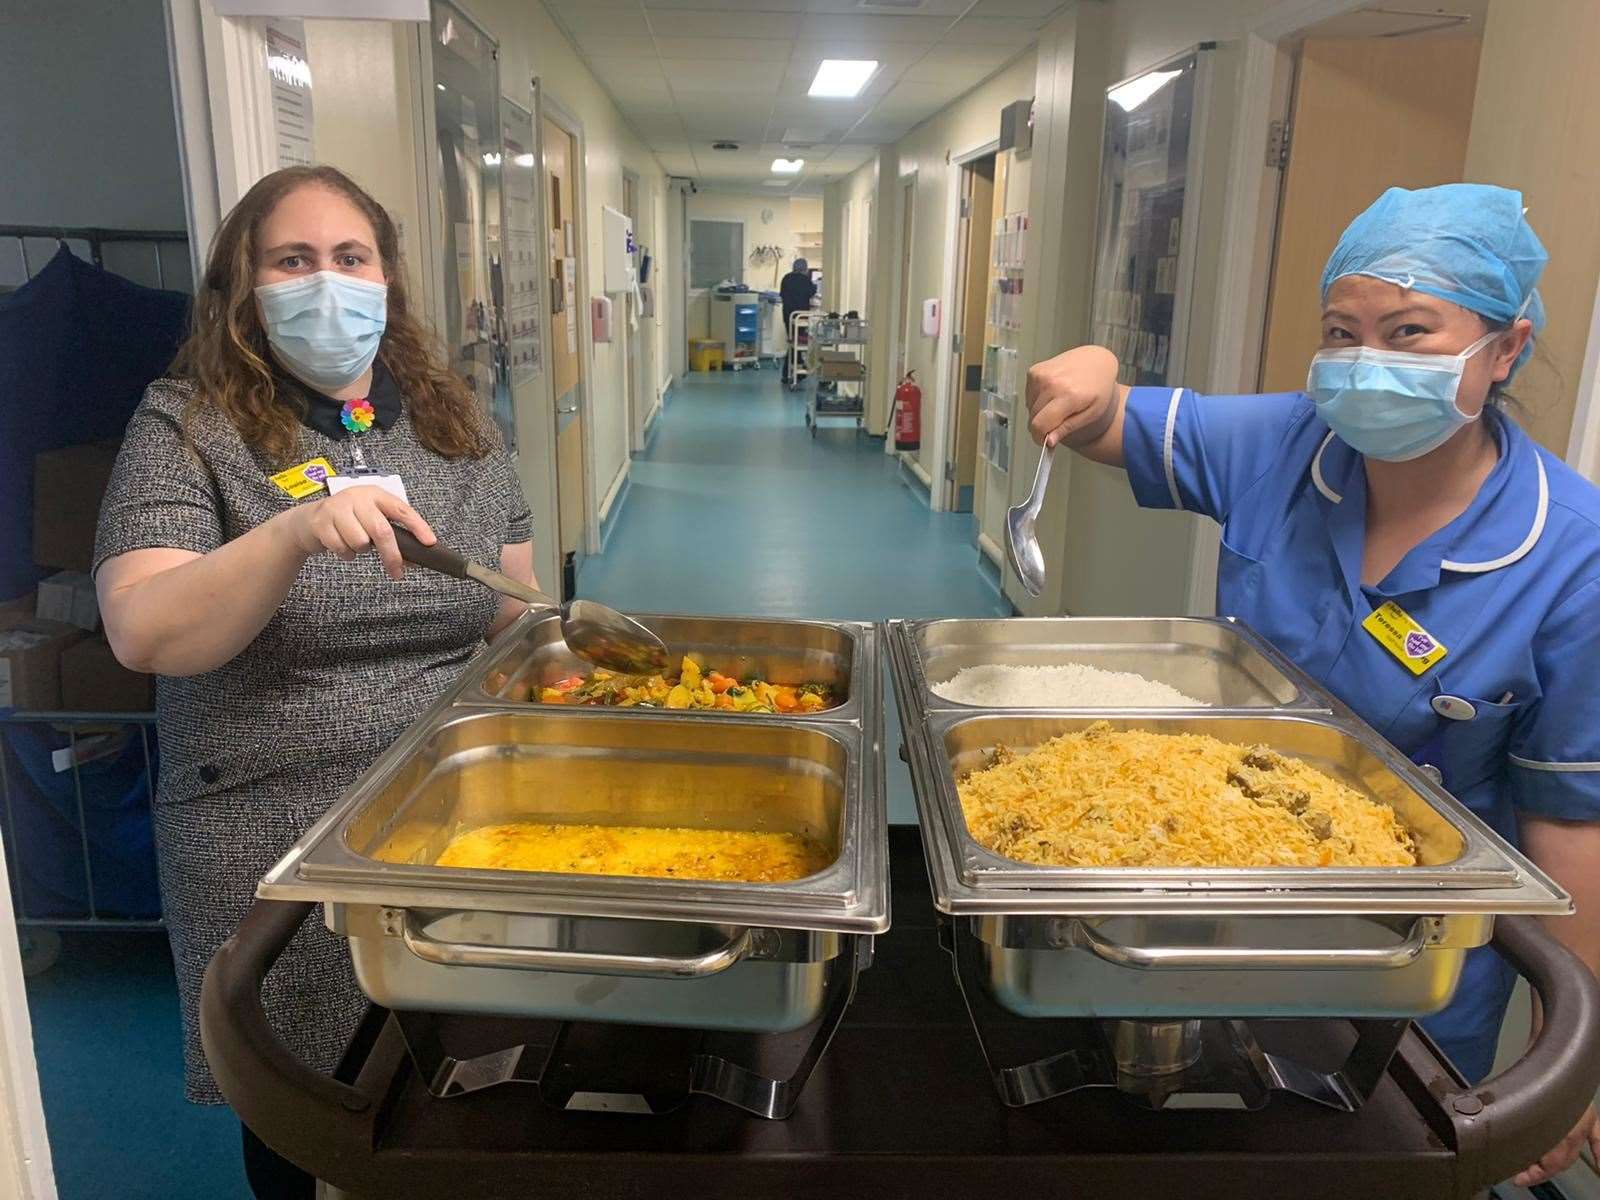 The Taj Cuisine in Walderslade delivering food to NHS staff at Medway Maritime Hospital battling Covid-19